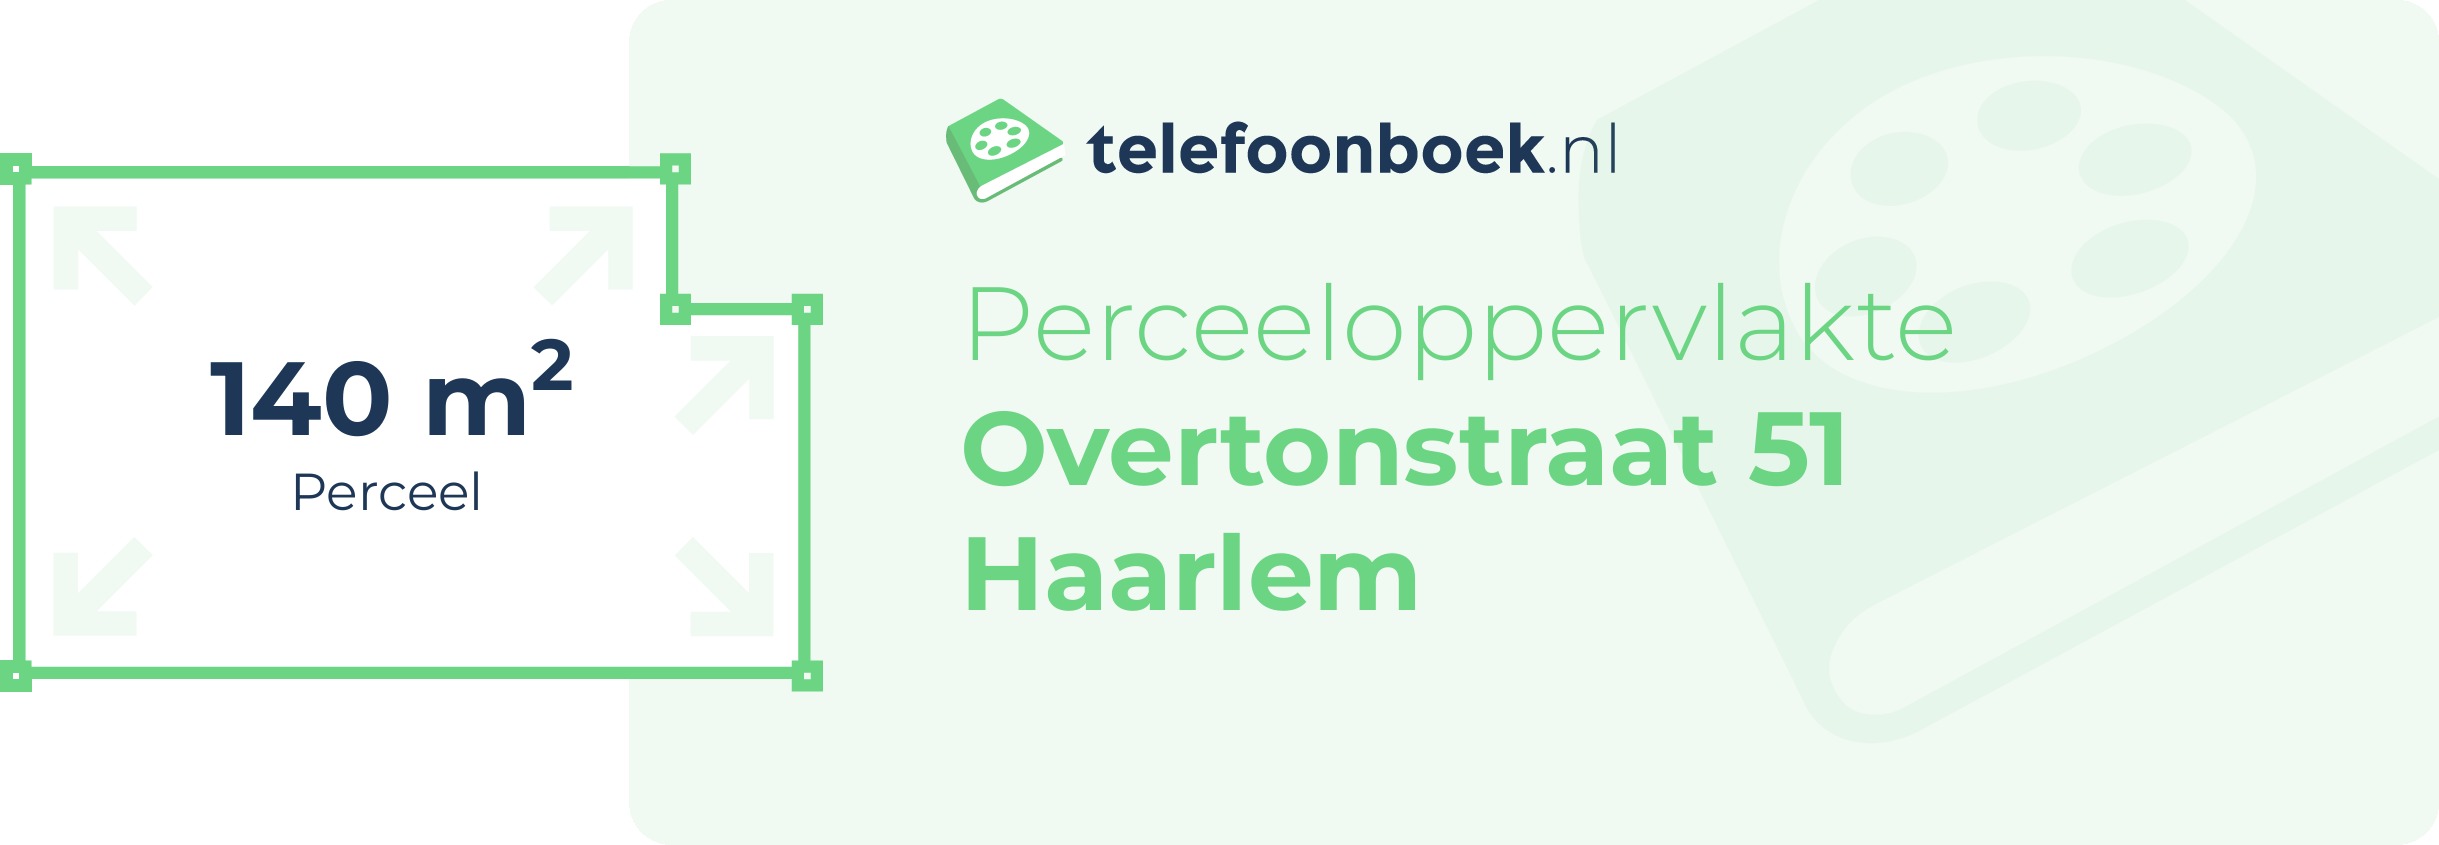 Perceeloppervlakte Overtonstraat 51 Haarlem